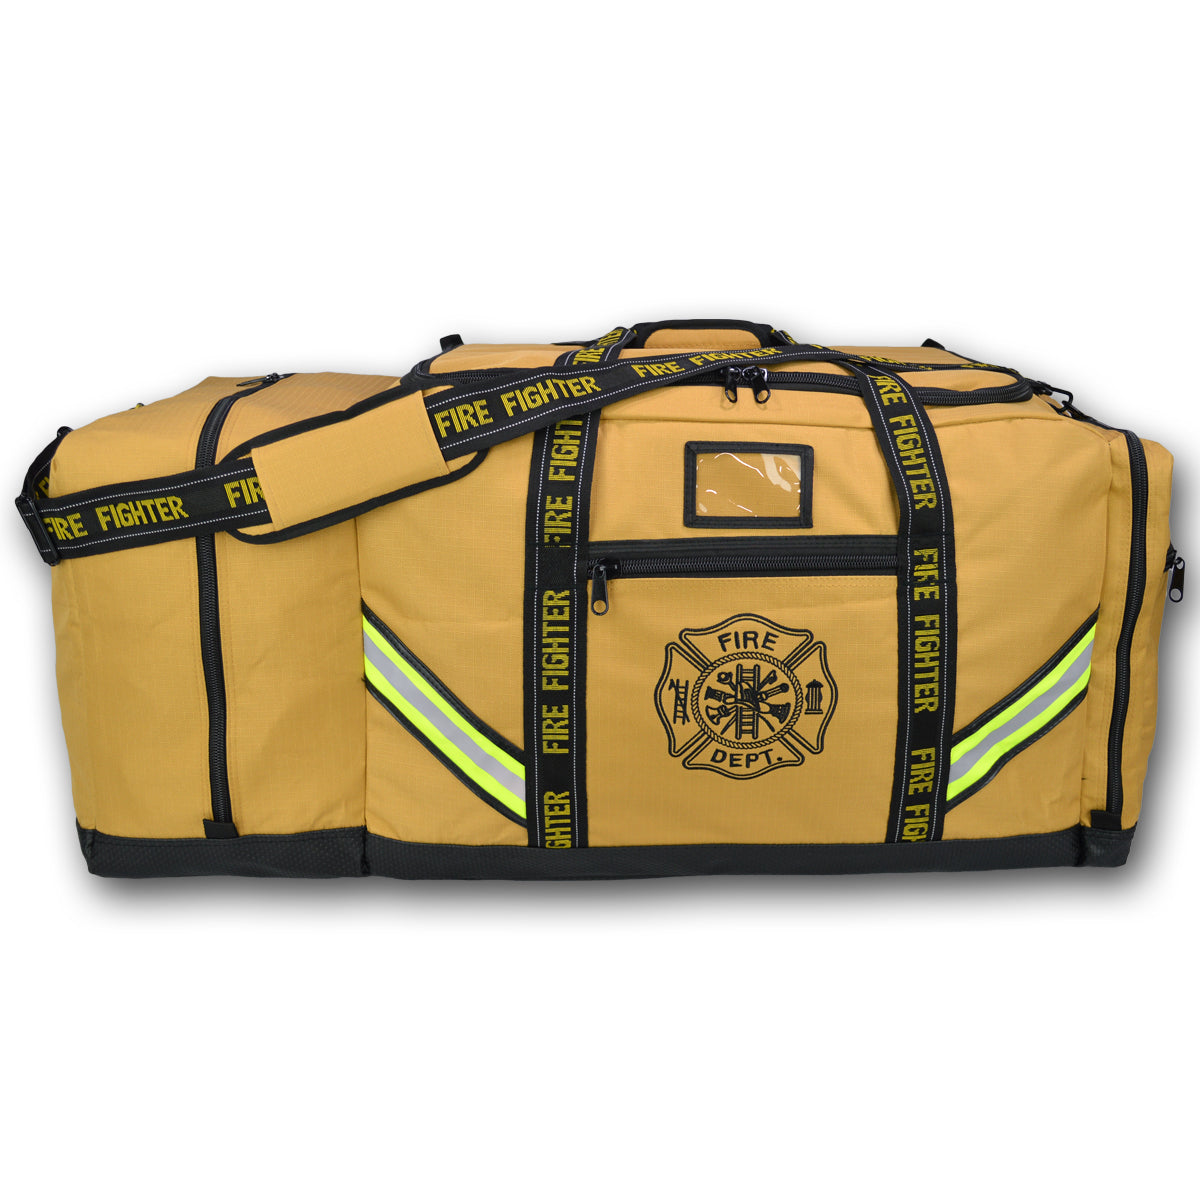 Firefighter Turnout Gear Trolley Bag